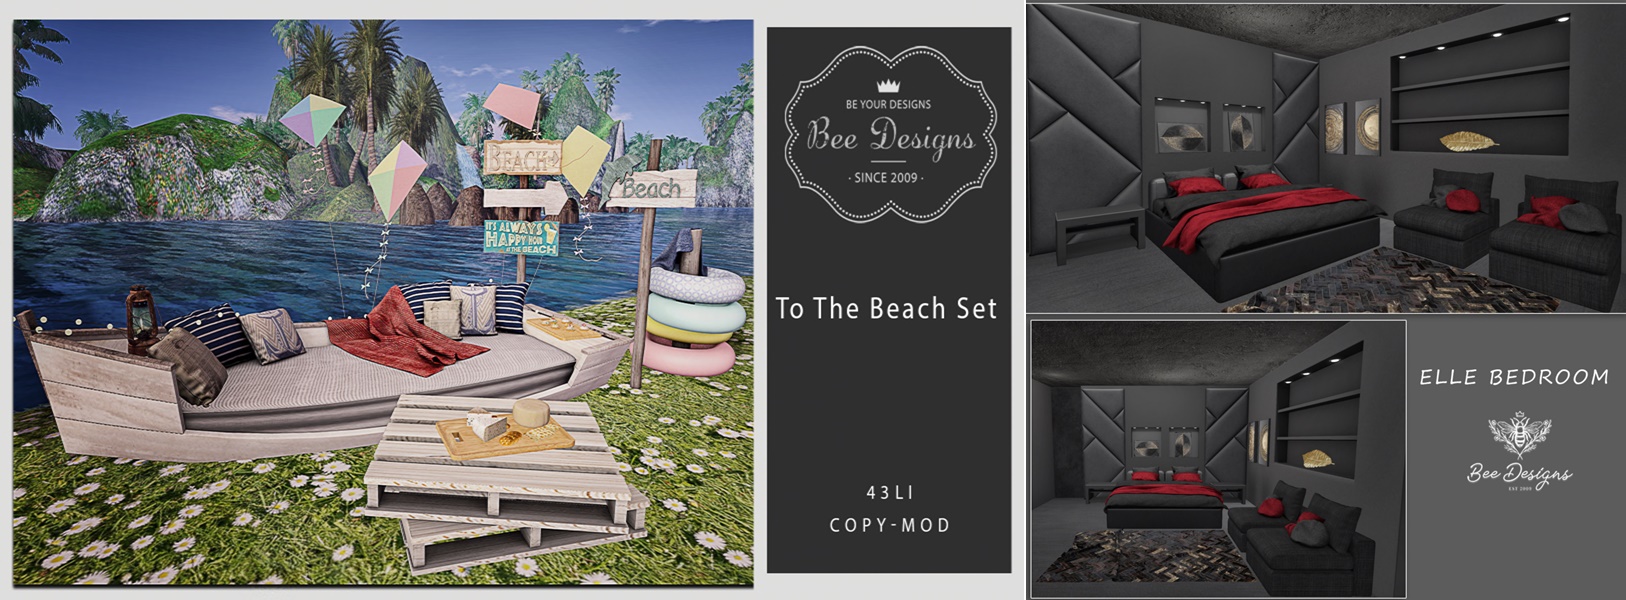 Bee Designs – To The Beach Set & Elle Bedroom